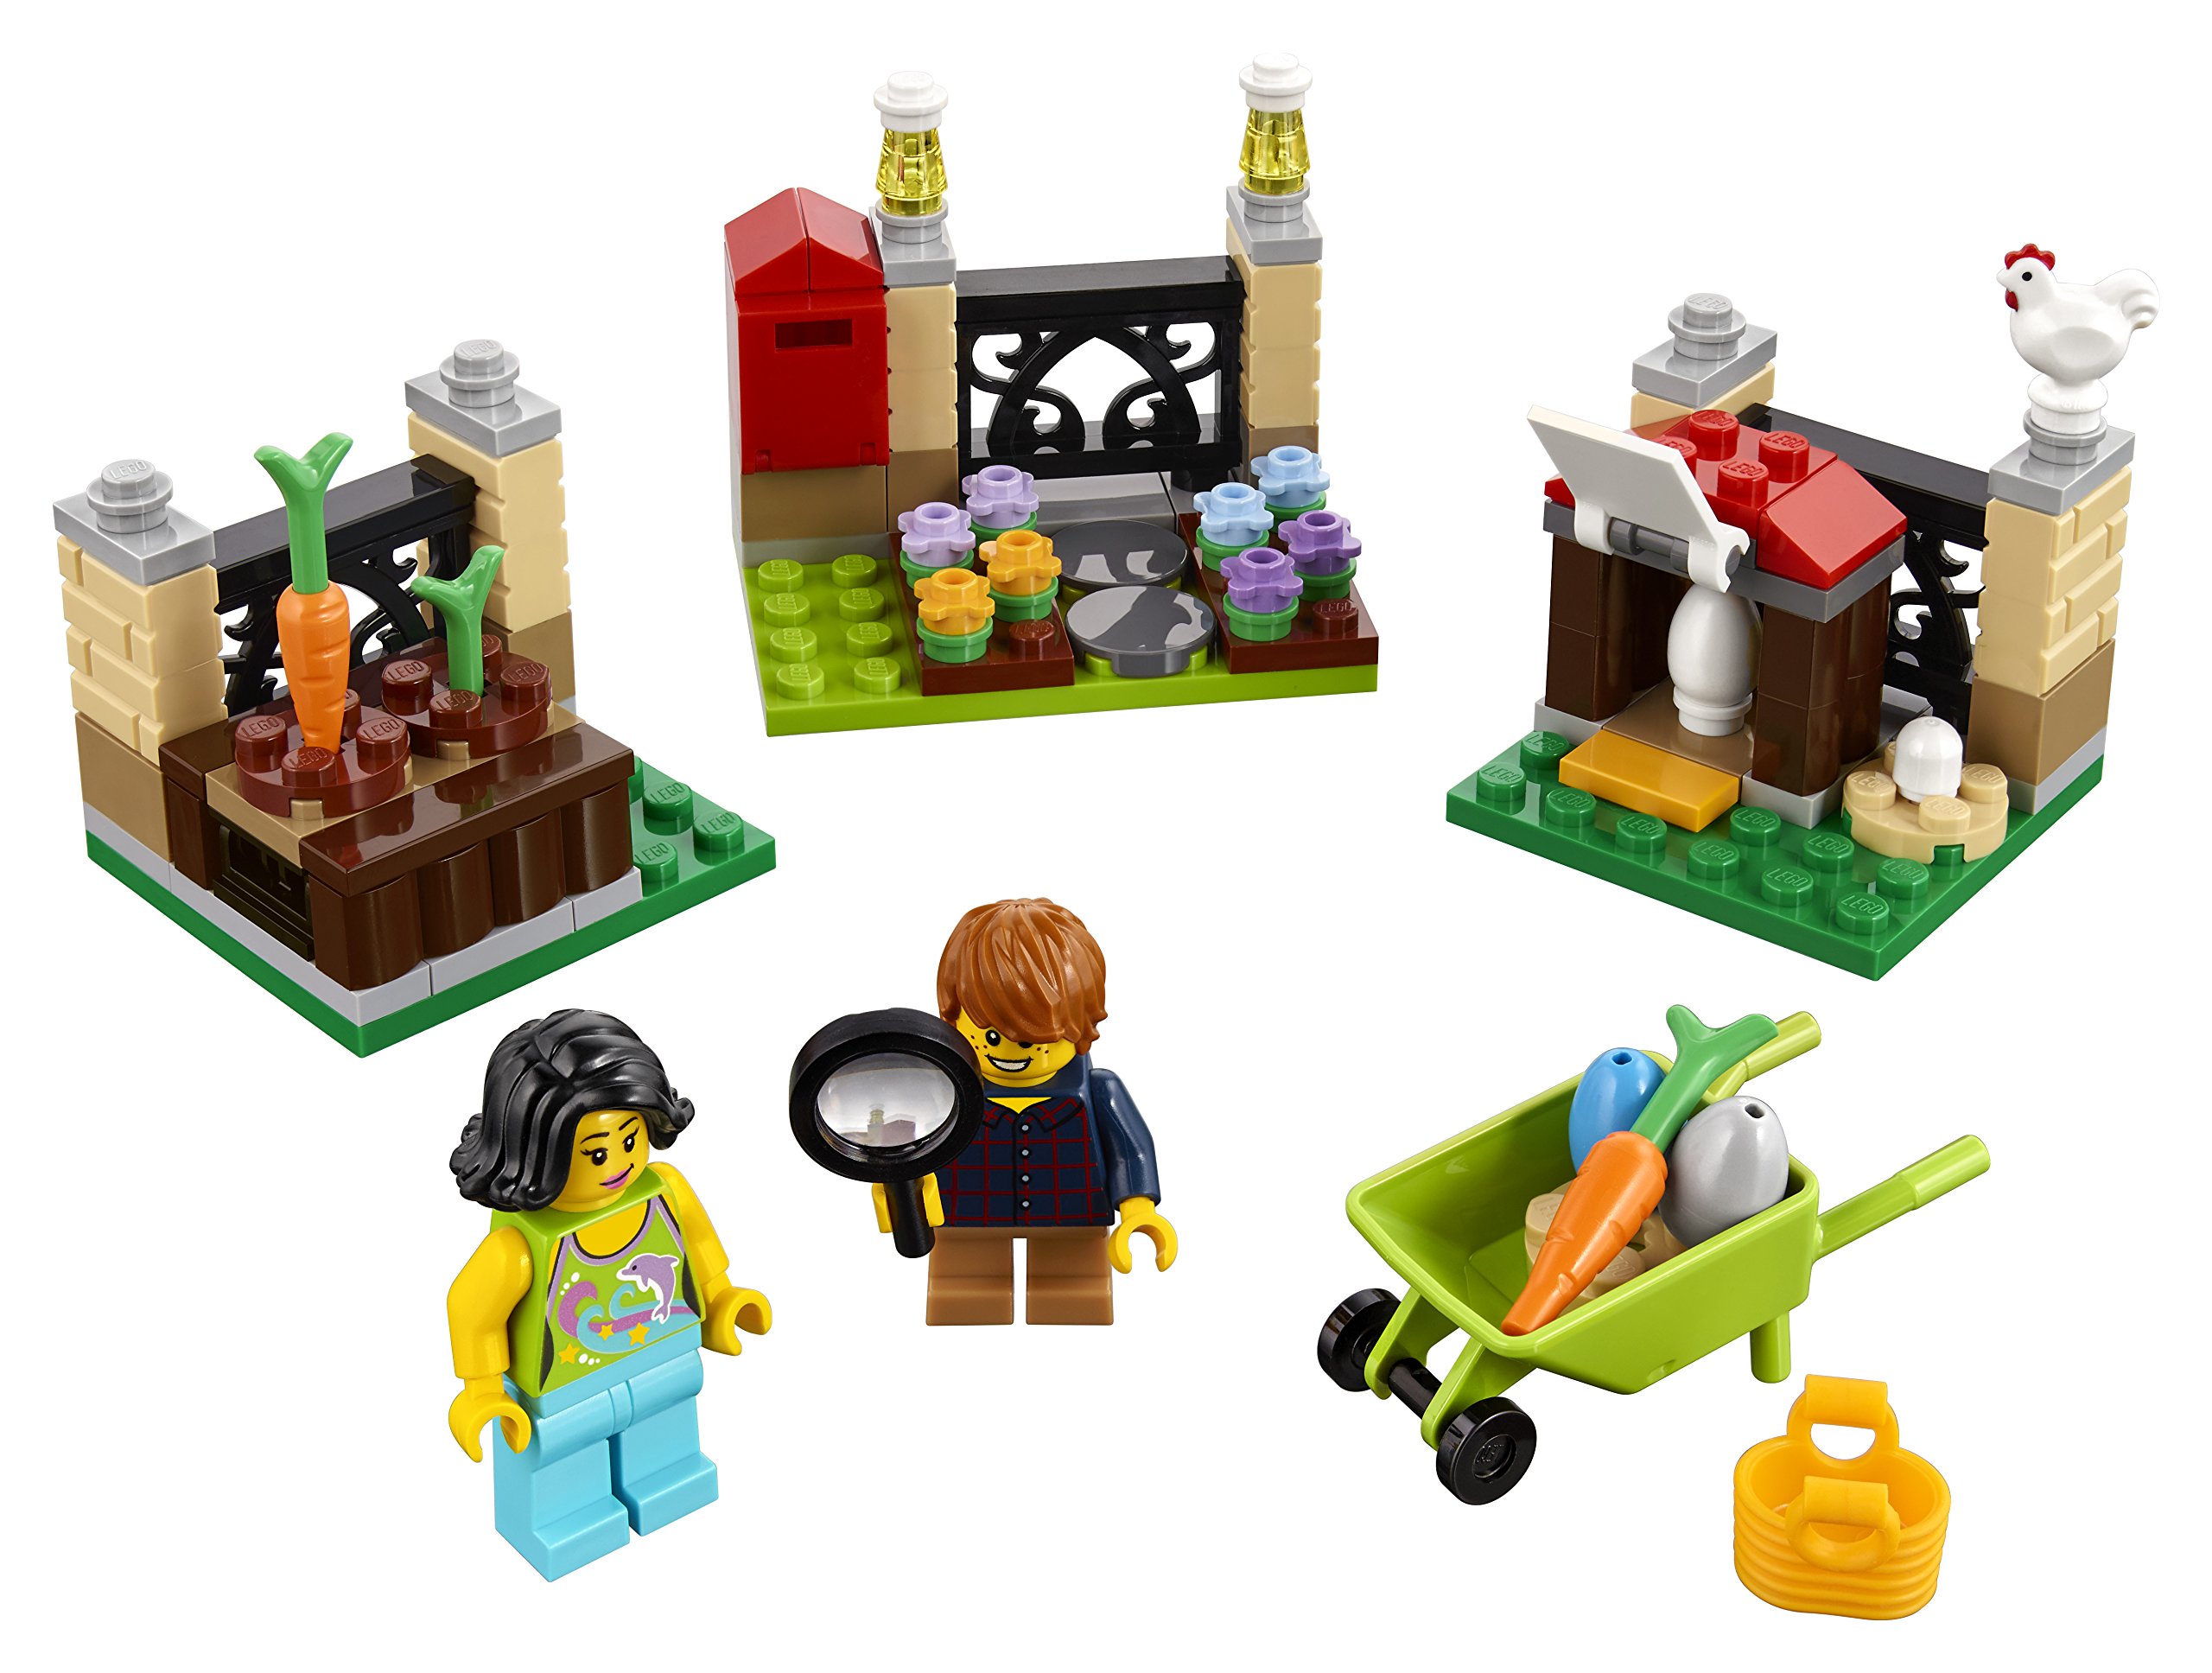 LEGO BrickHeadz Easter Bunny 40271 Building Kit (126 Pieces)